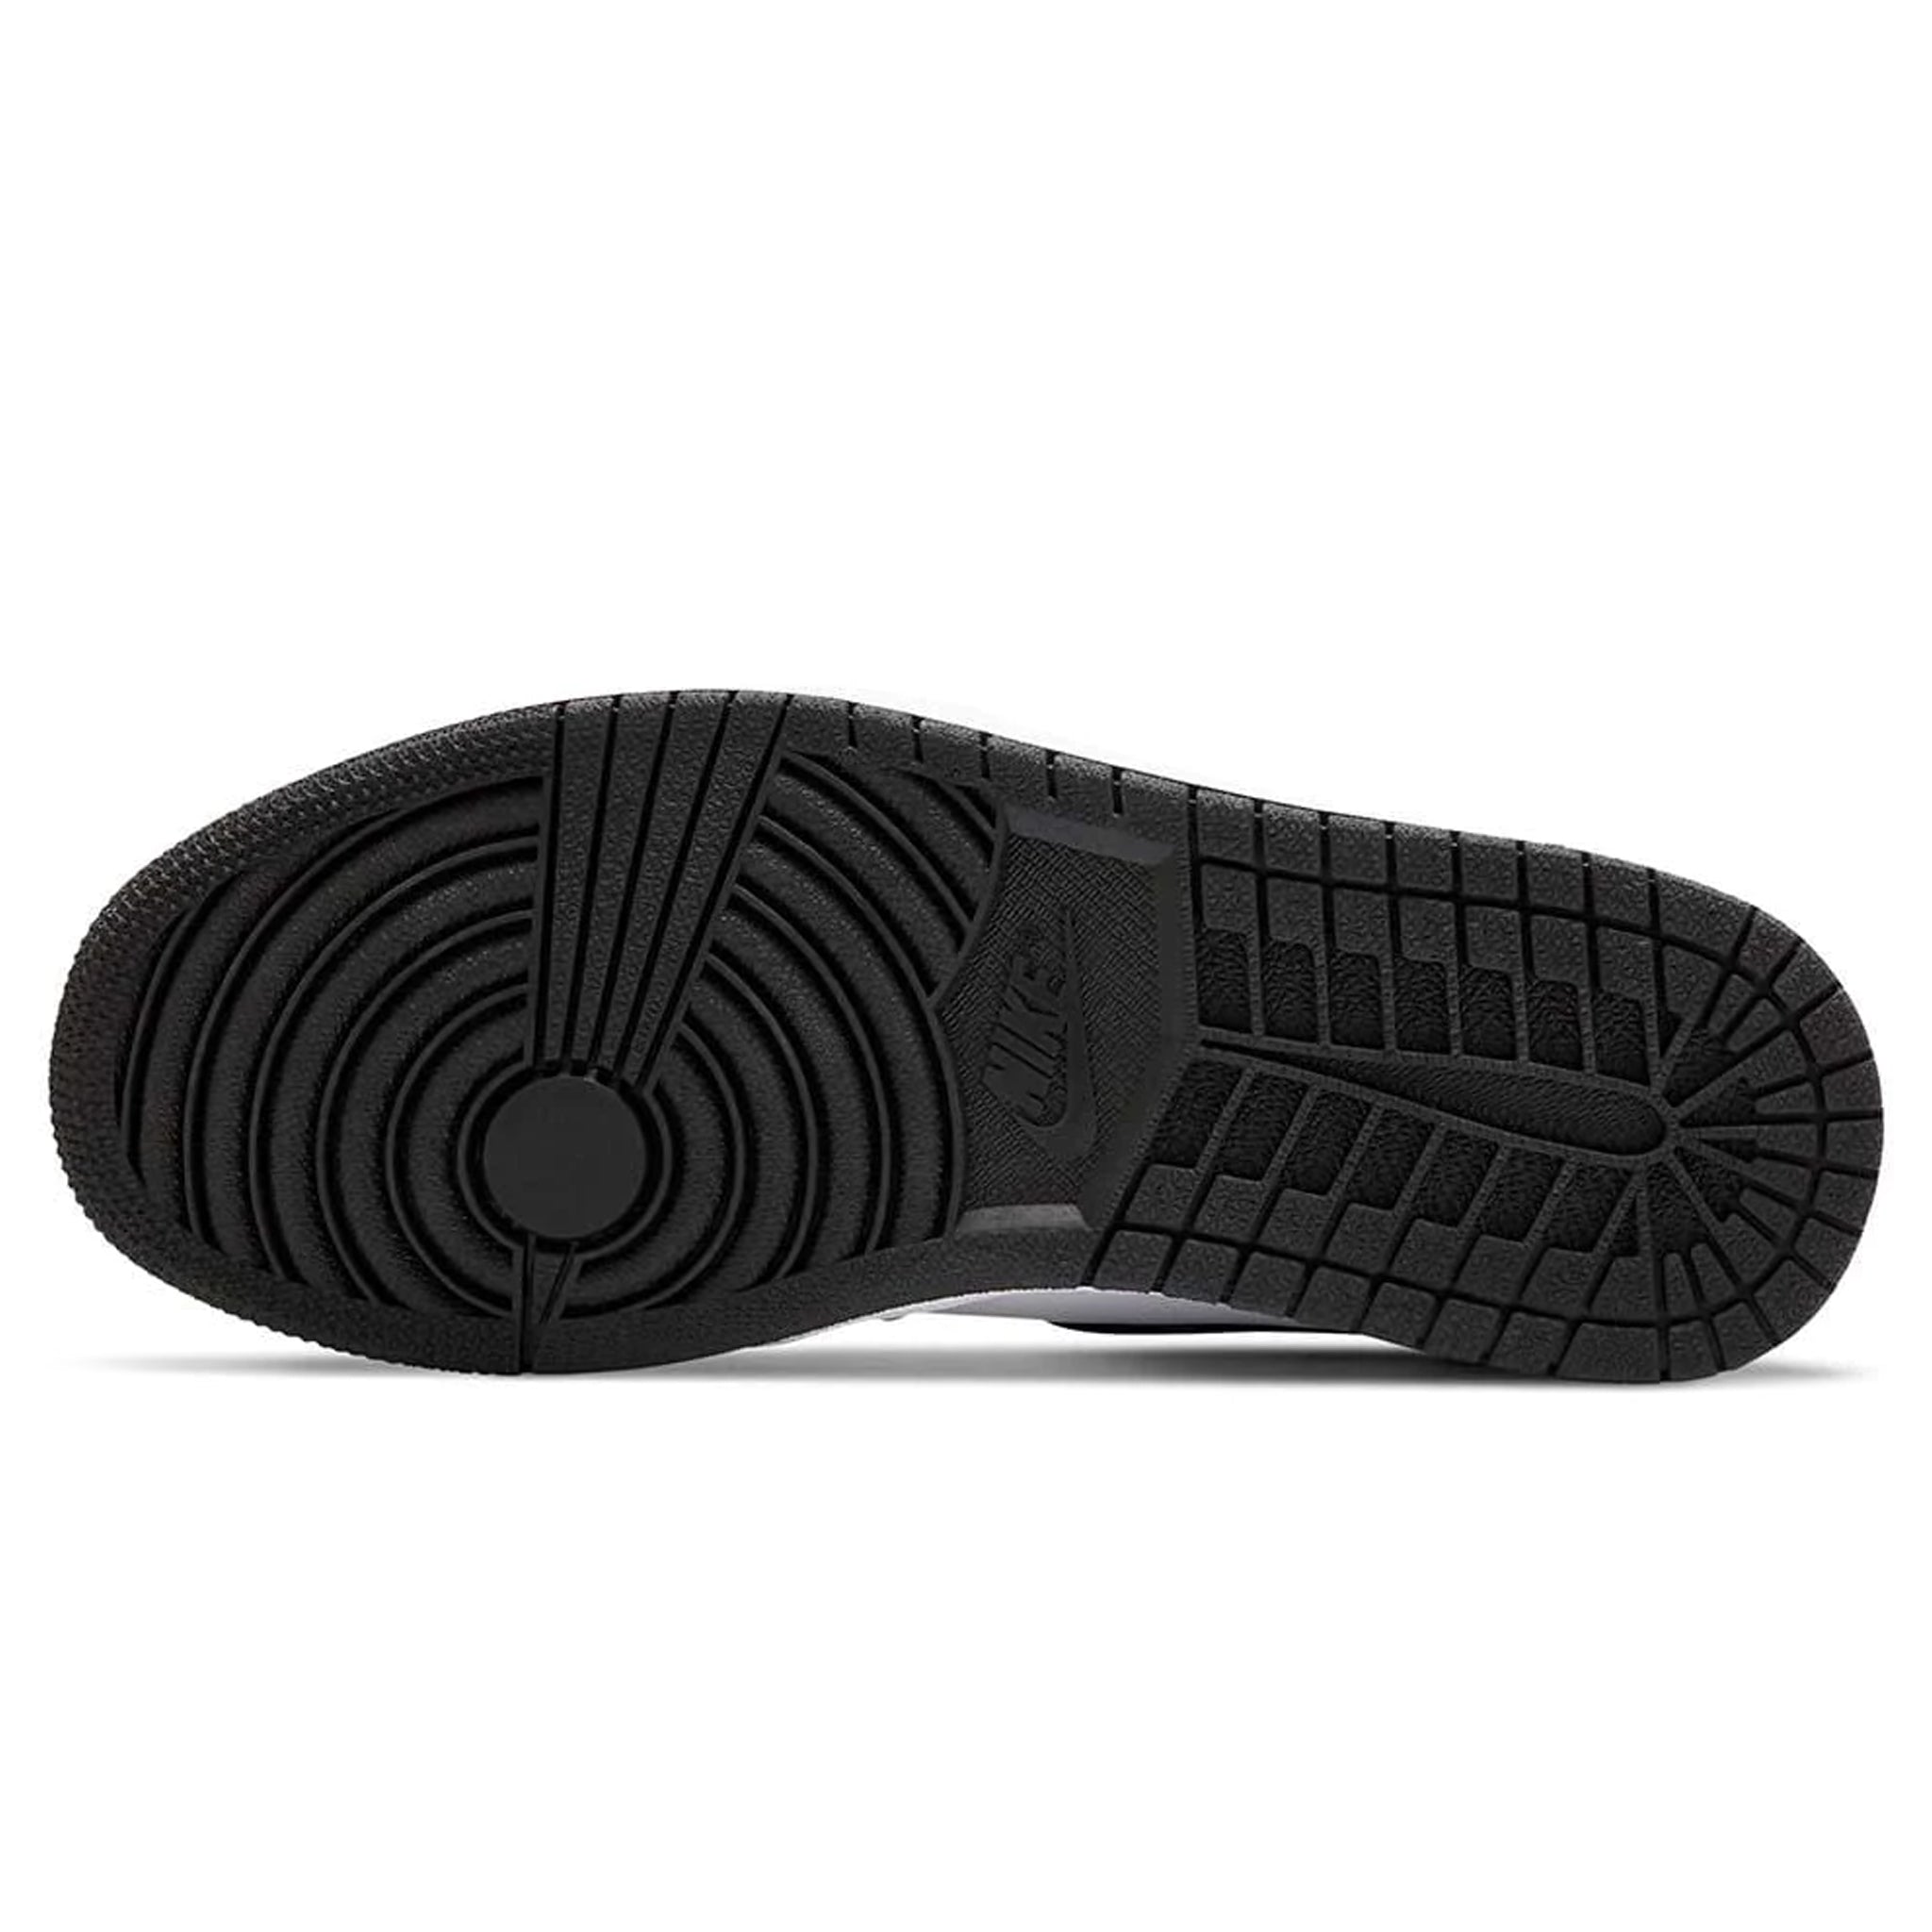 Sole view of Air Jordan 1 High Light Smoke Grey Sneaker 555088-126